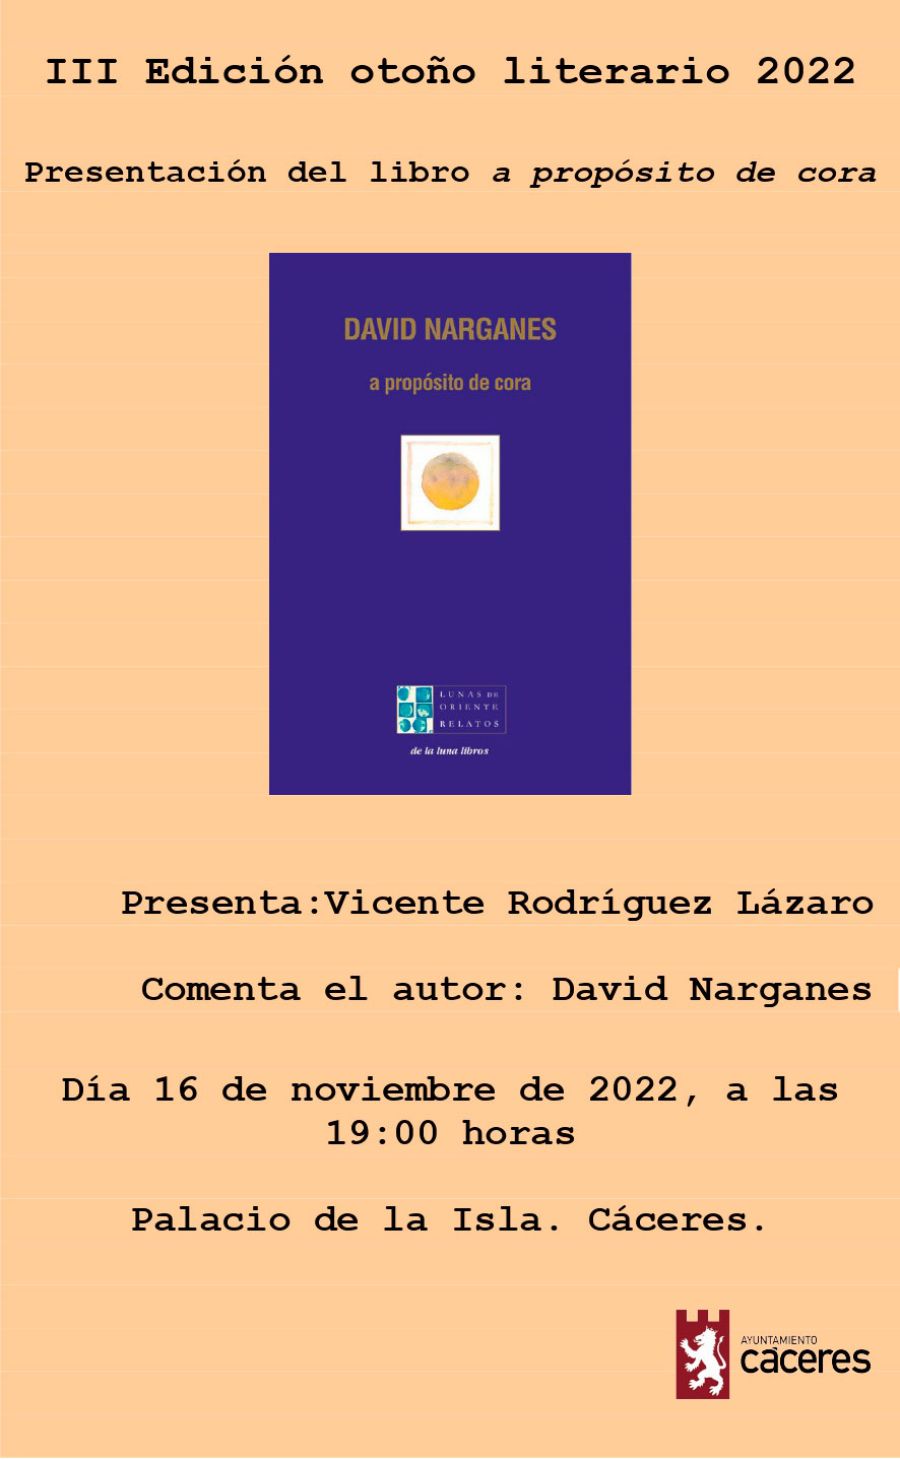 David Narganes Robas, presenta “A propósito de Cora” | III Edición Otoño Literario